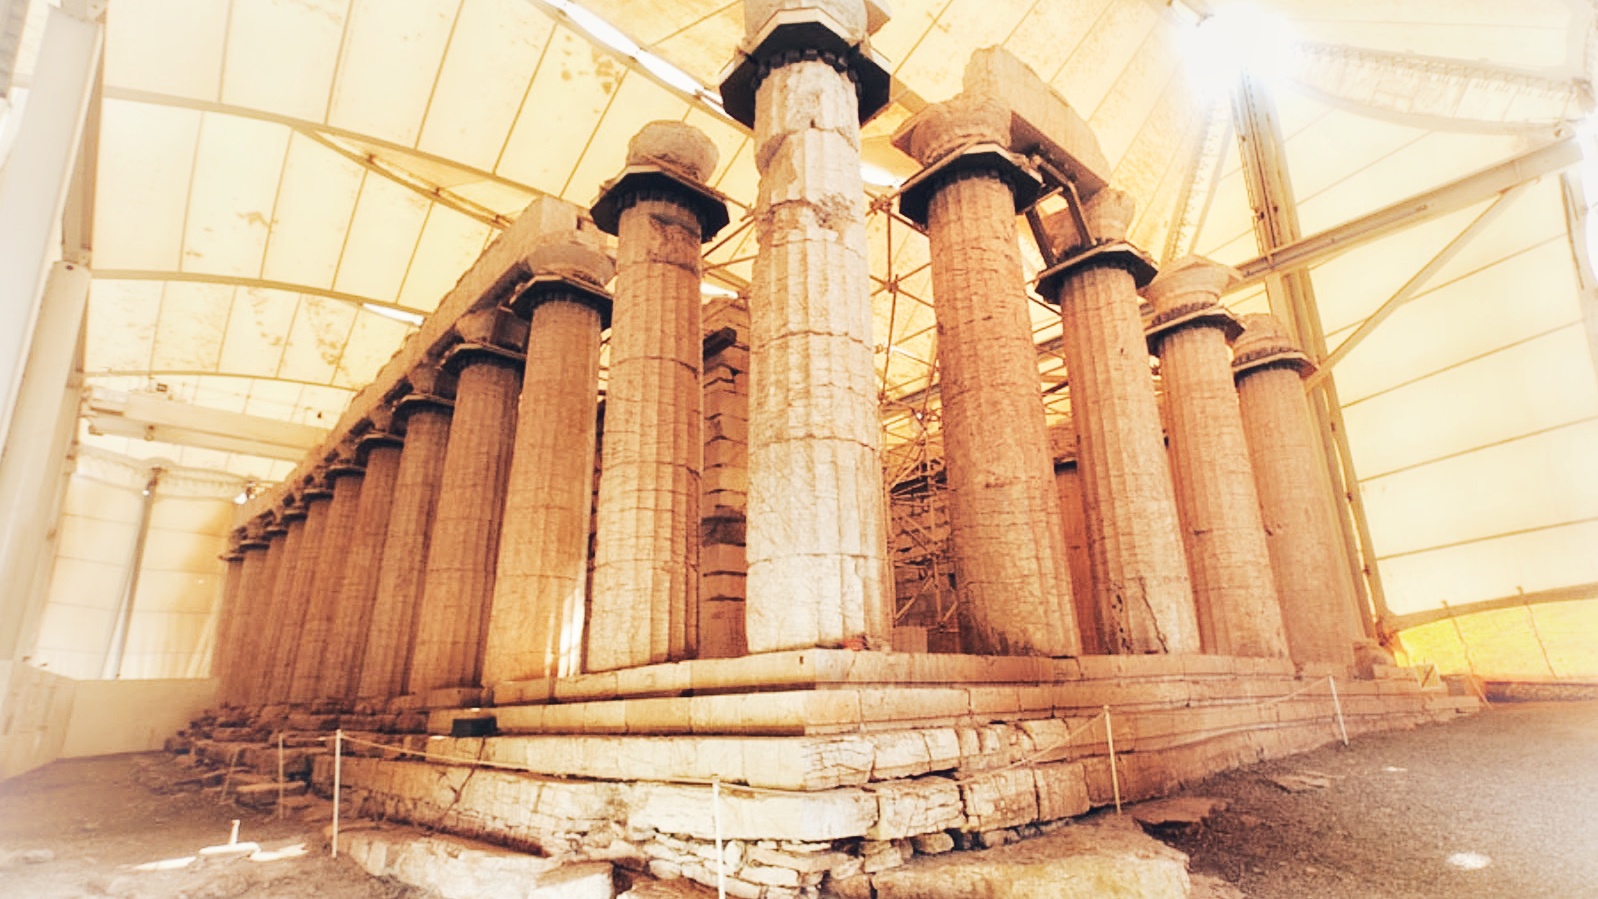 O απροστάτευτος ναός του Επικούριου Απόλλωνα. Το μνημείο που πληγώνουμε (ευθέως)